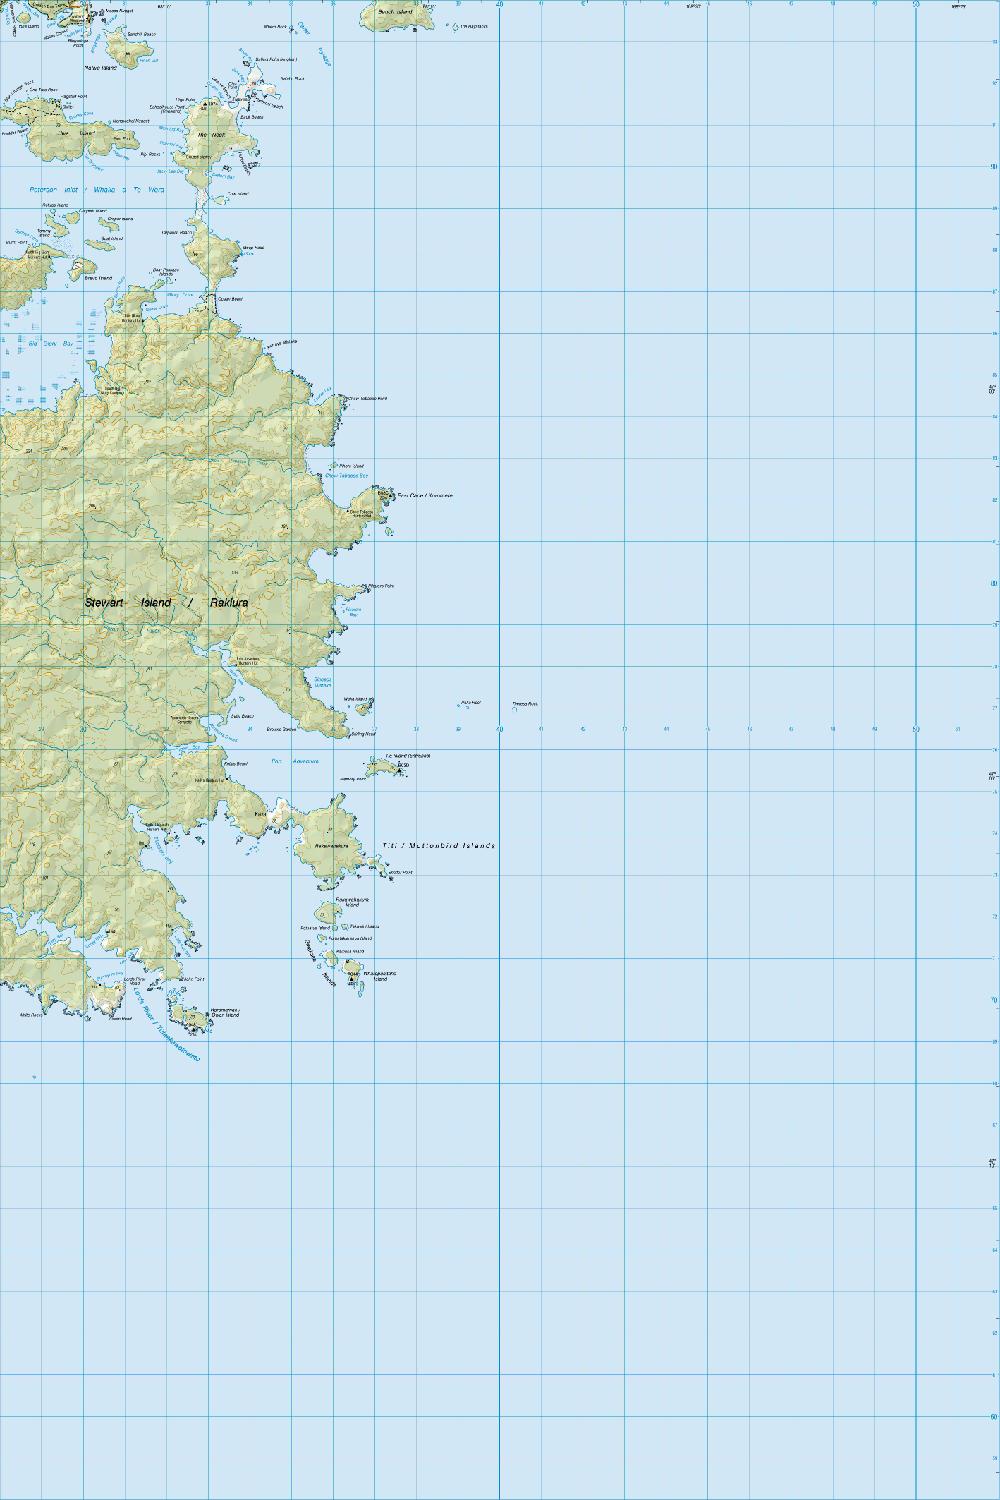 Topo map of Port Adventure